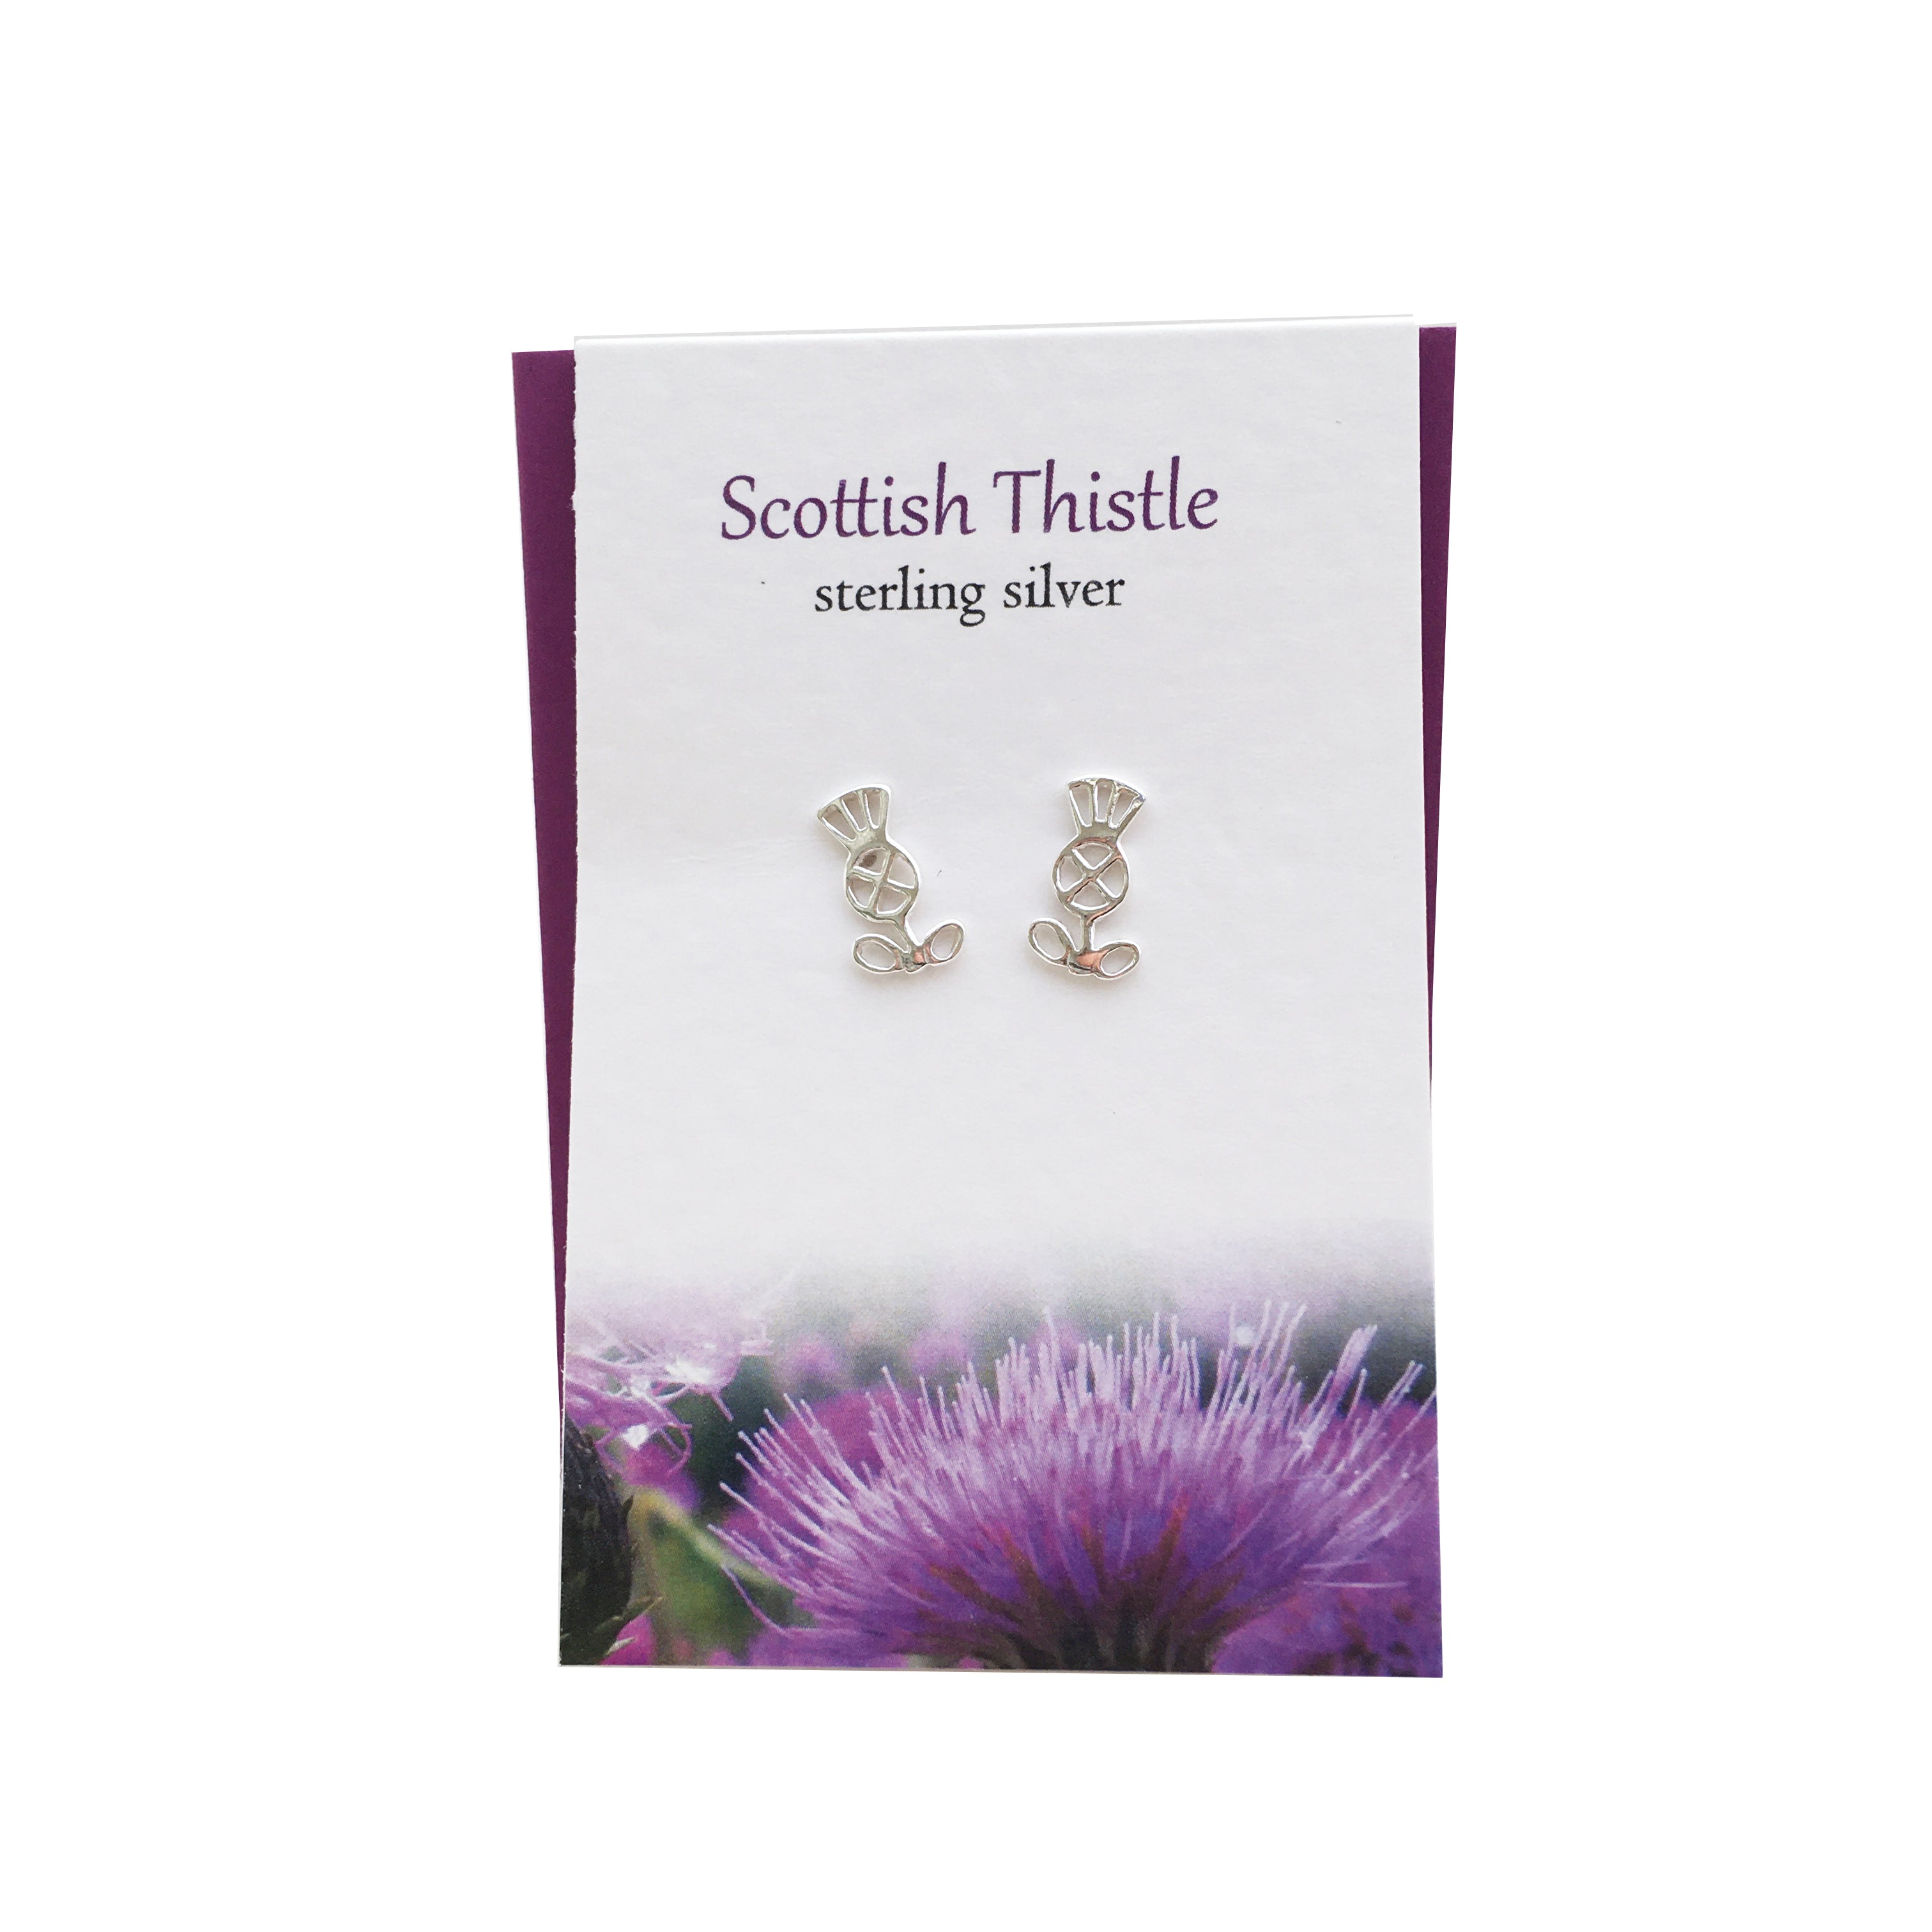 Scottish Thistle silver stud earrings| The Silver Studio Scotland